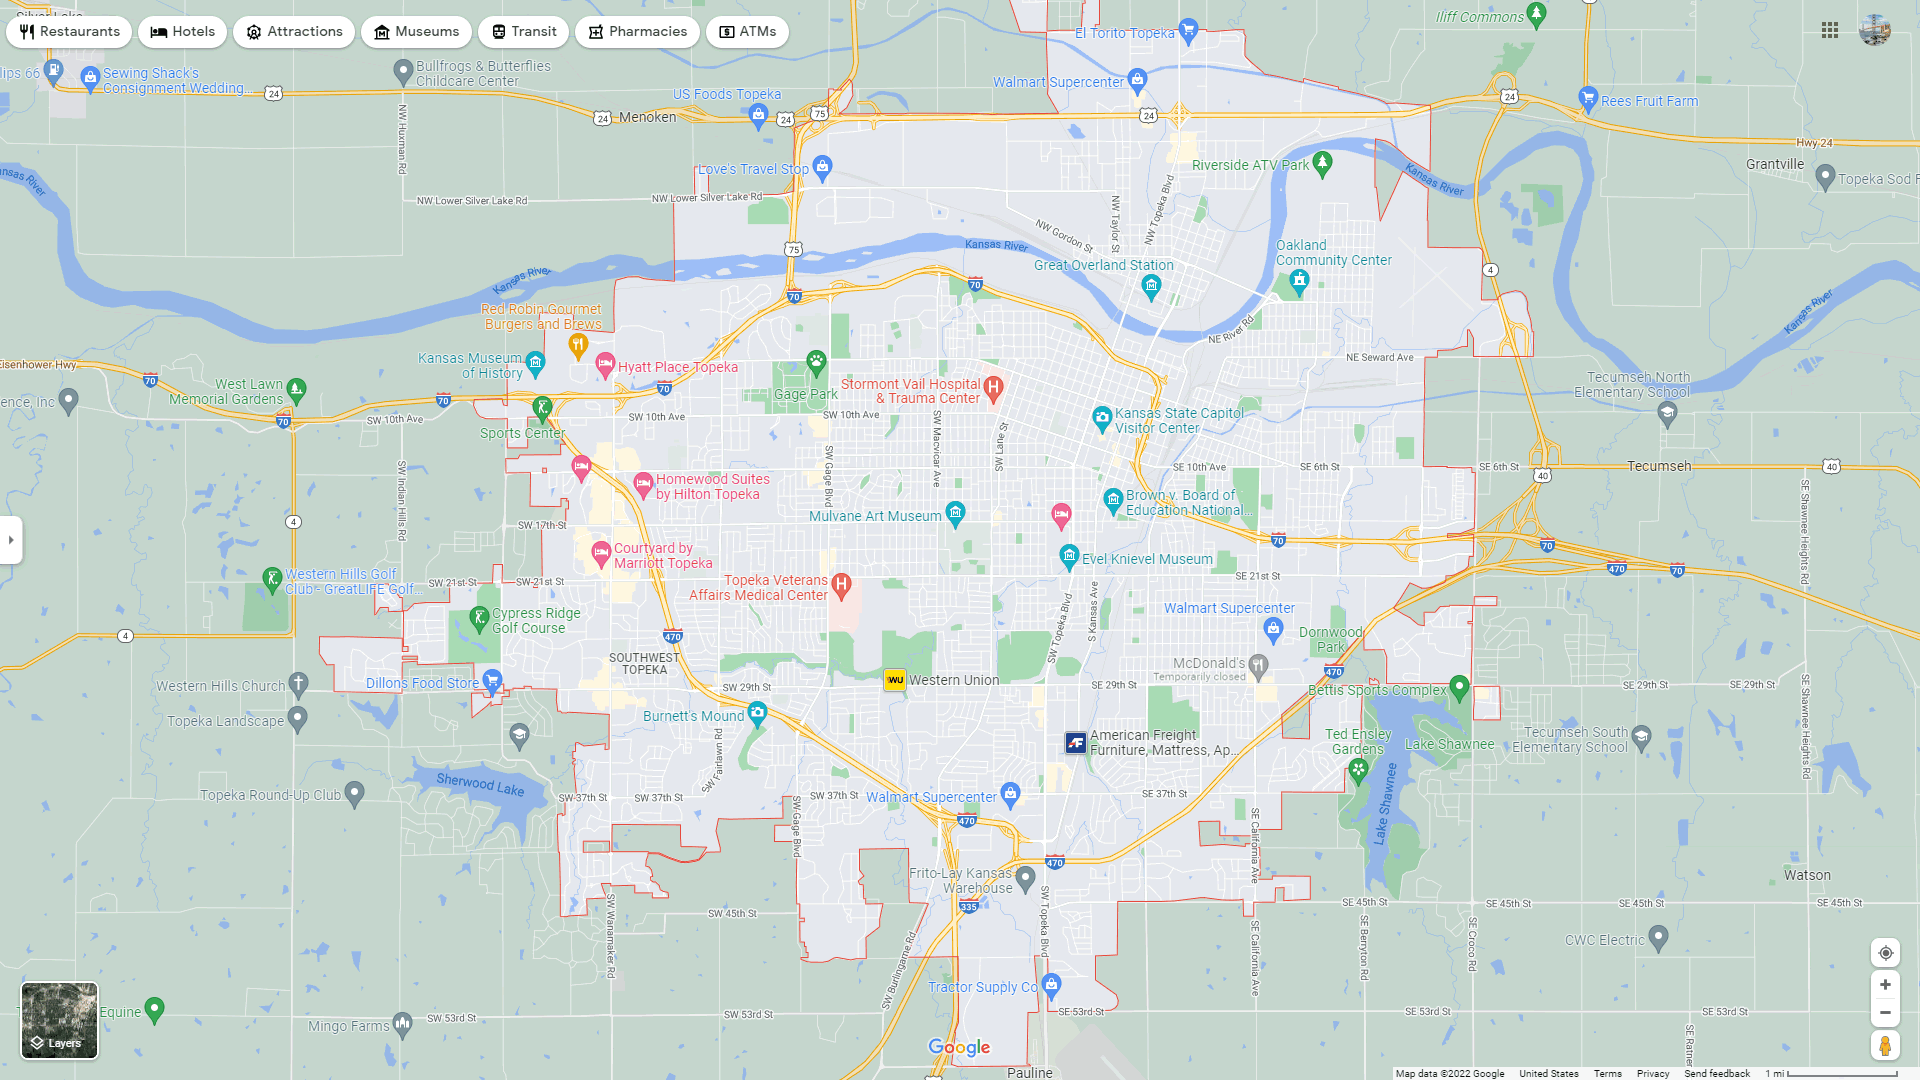 Shawnee map